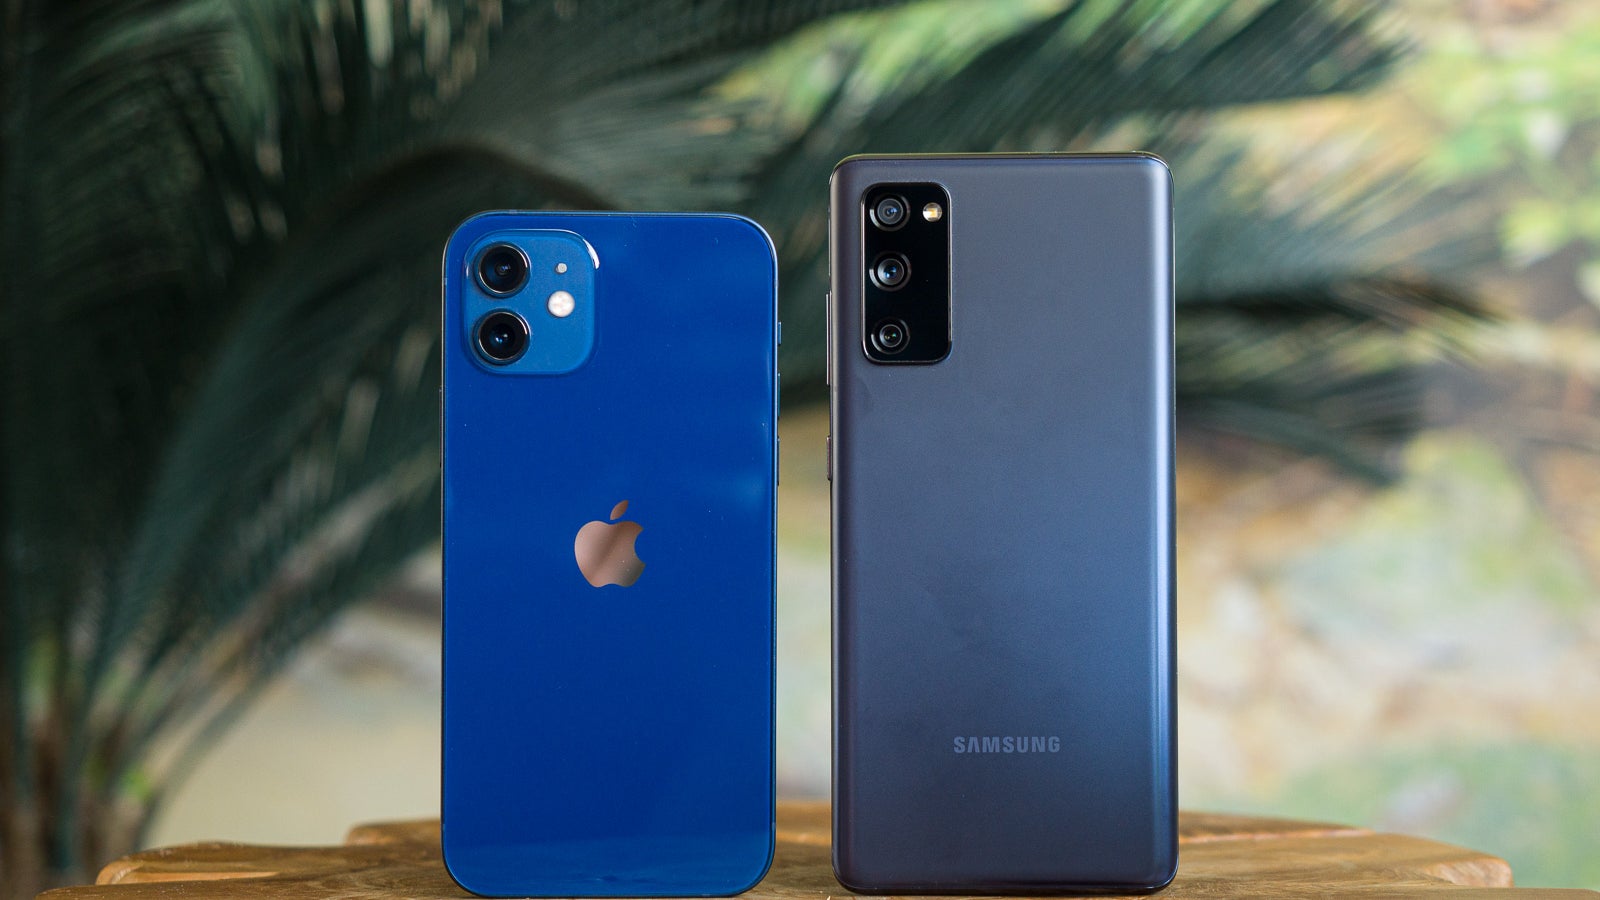 Apple iPhone 12 vs Samsung Galaxy S20 FE